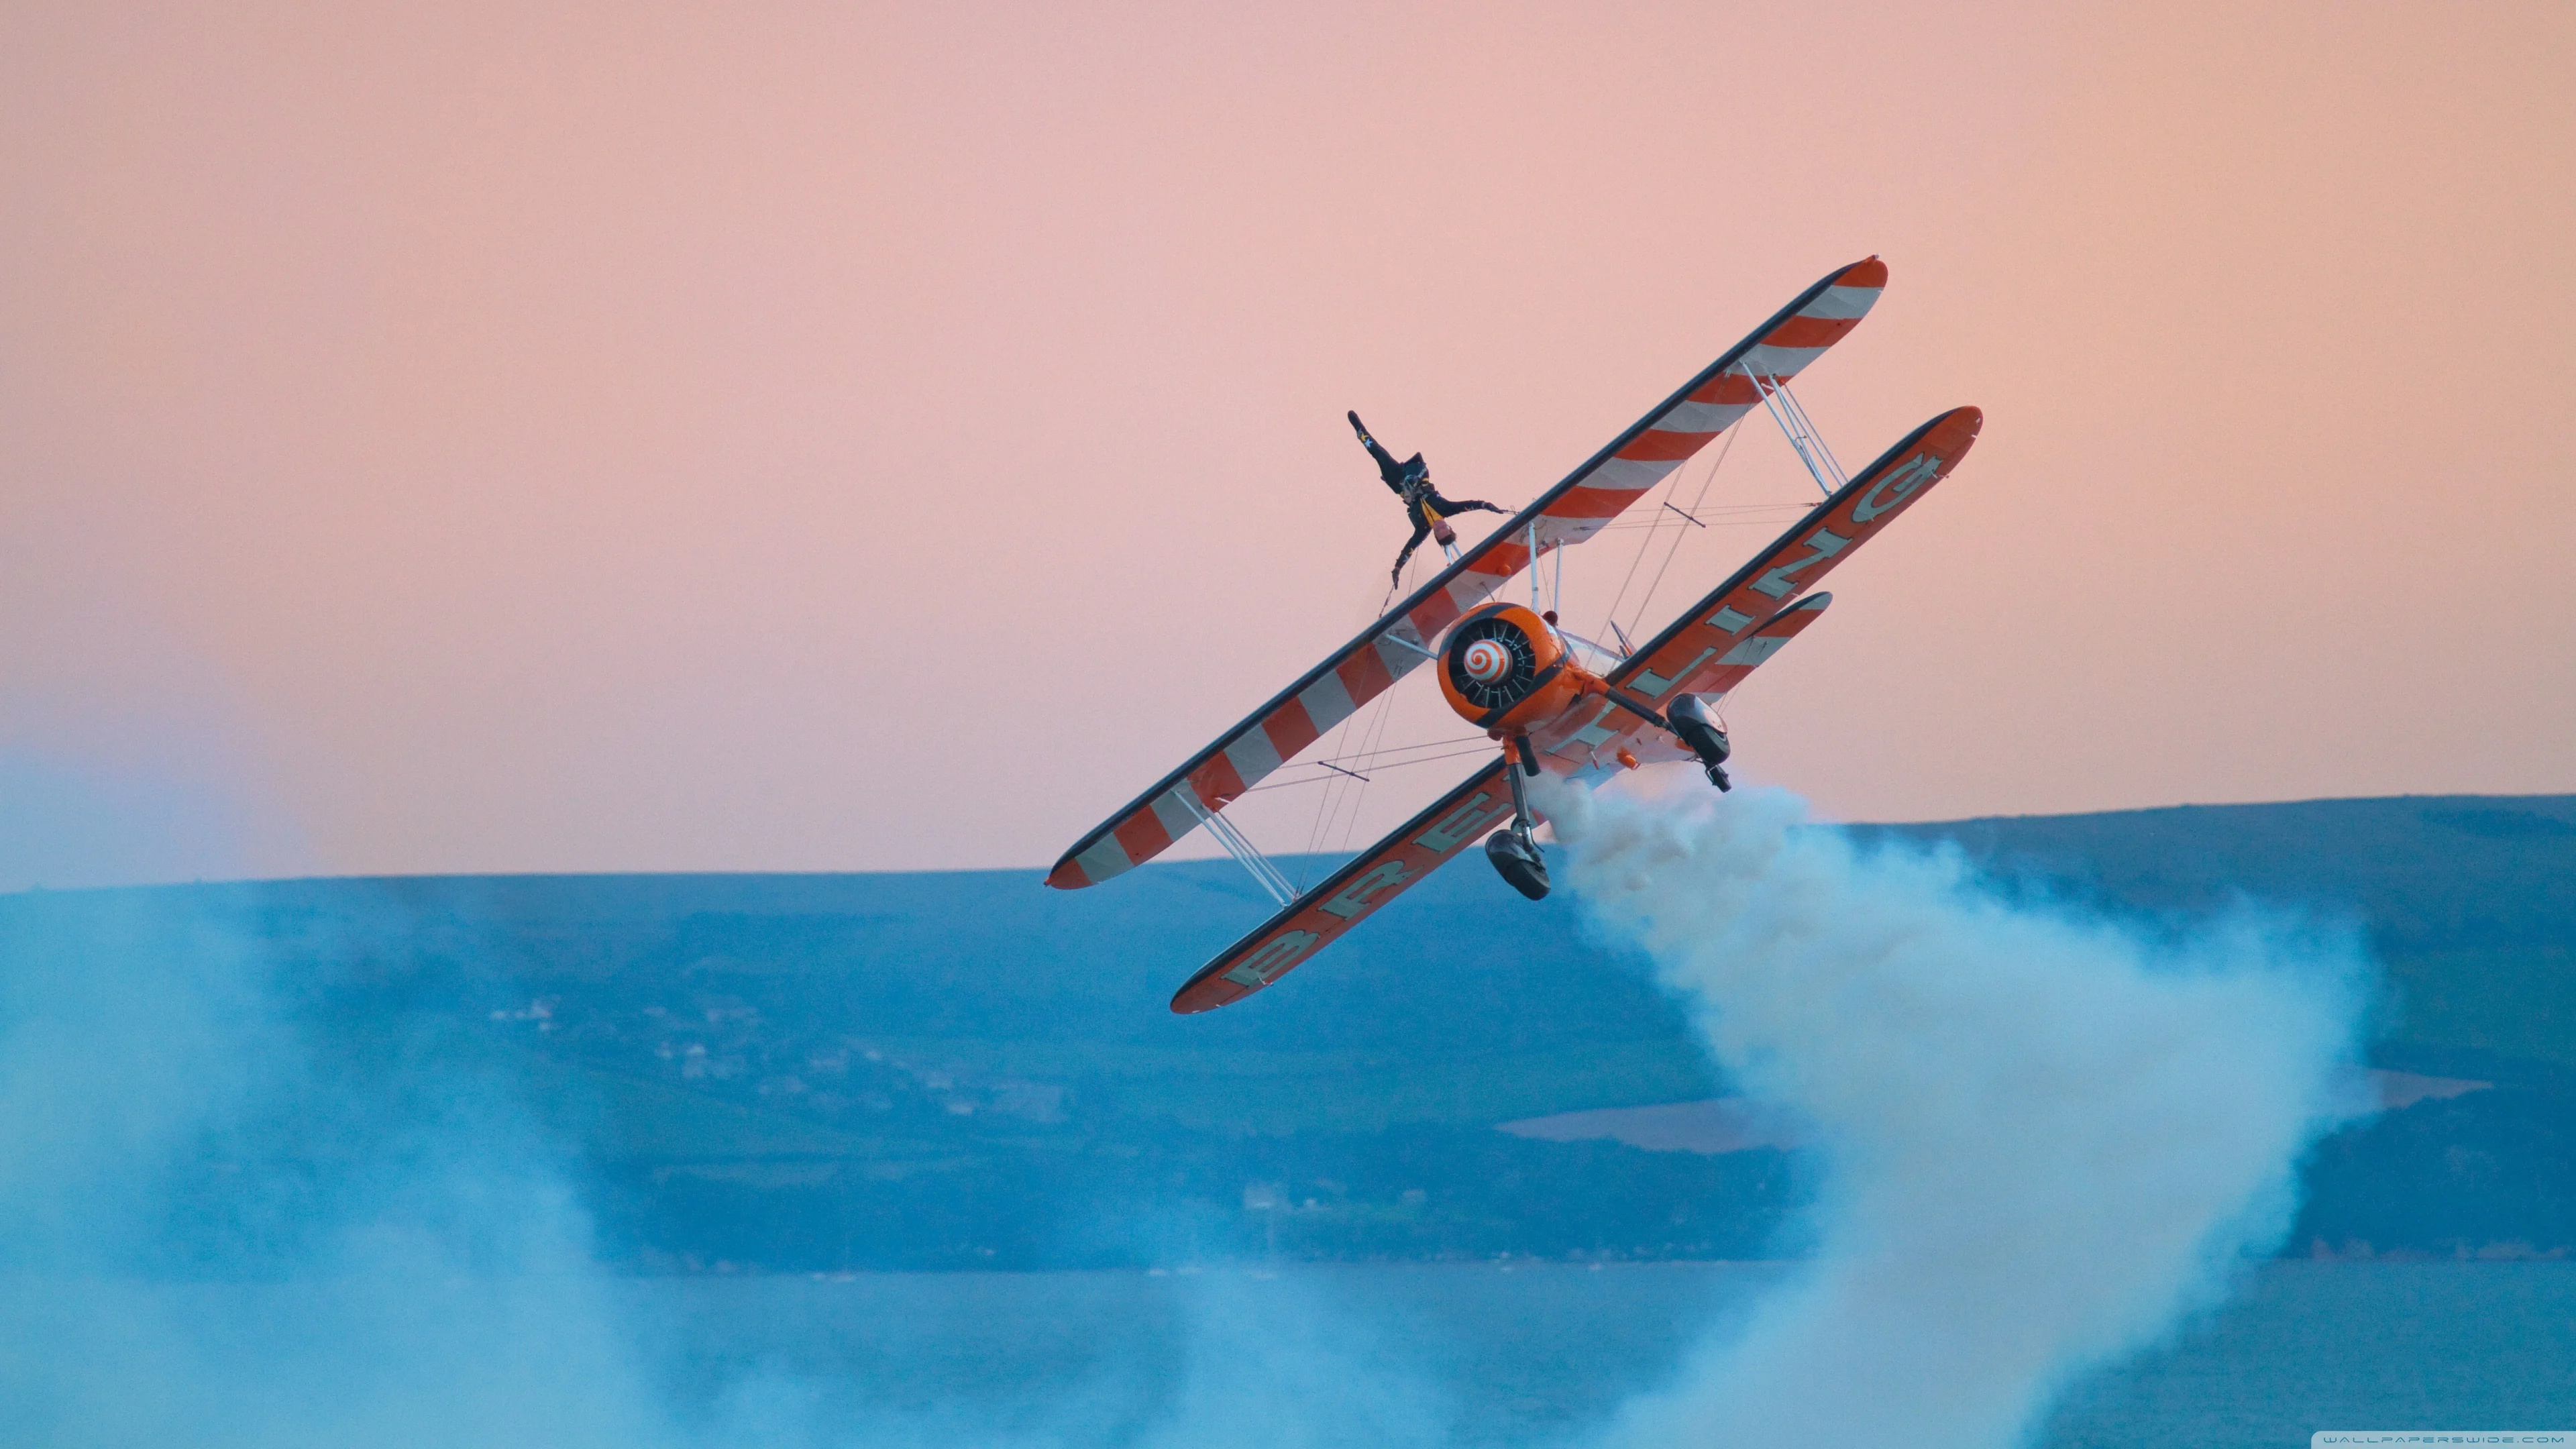 Aerobatics: Biplane aircraft, Extreme tricks by a pilot, Dangerous air sport. 3840x2160 4K Background.